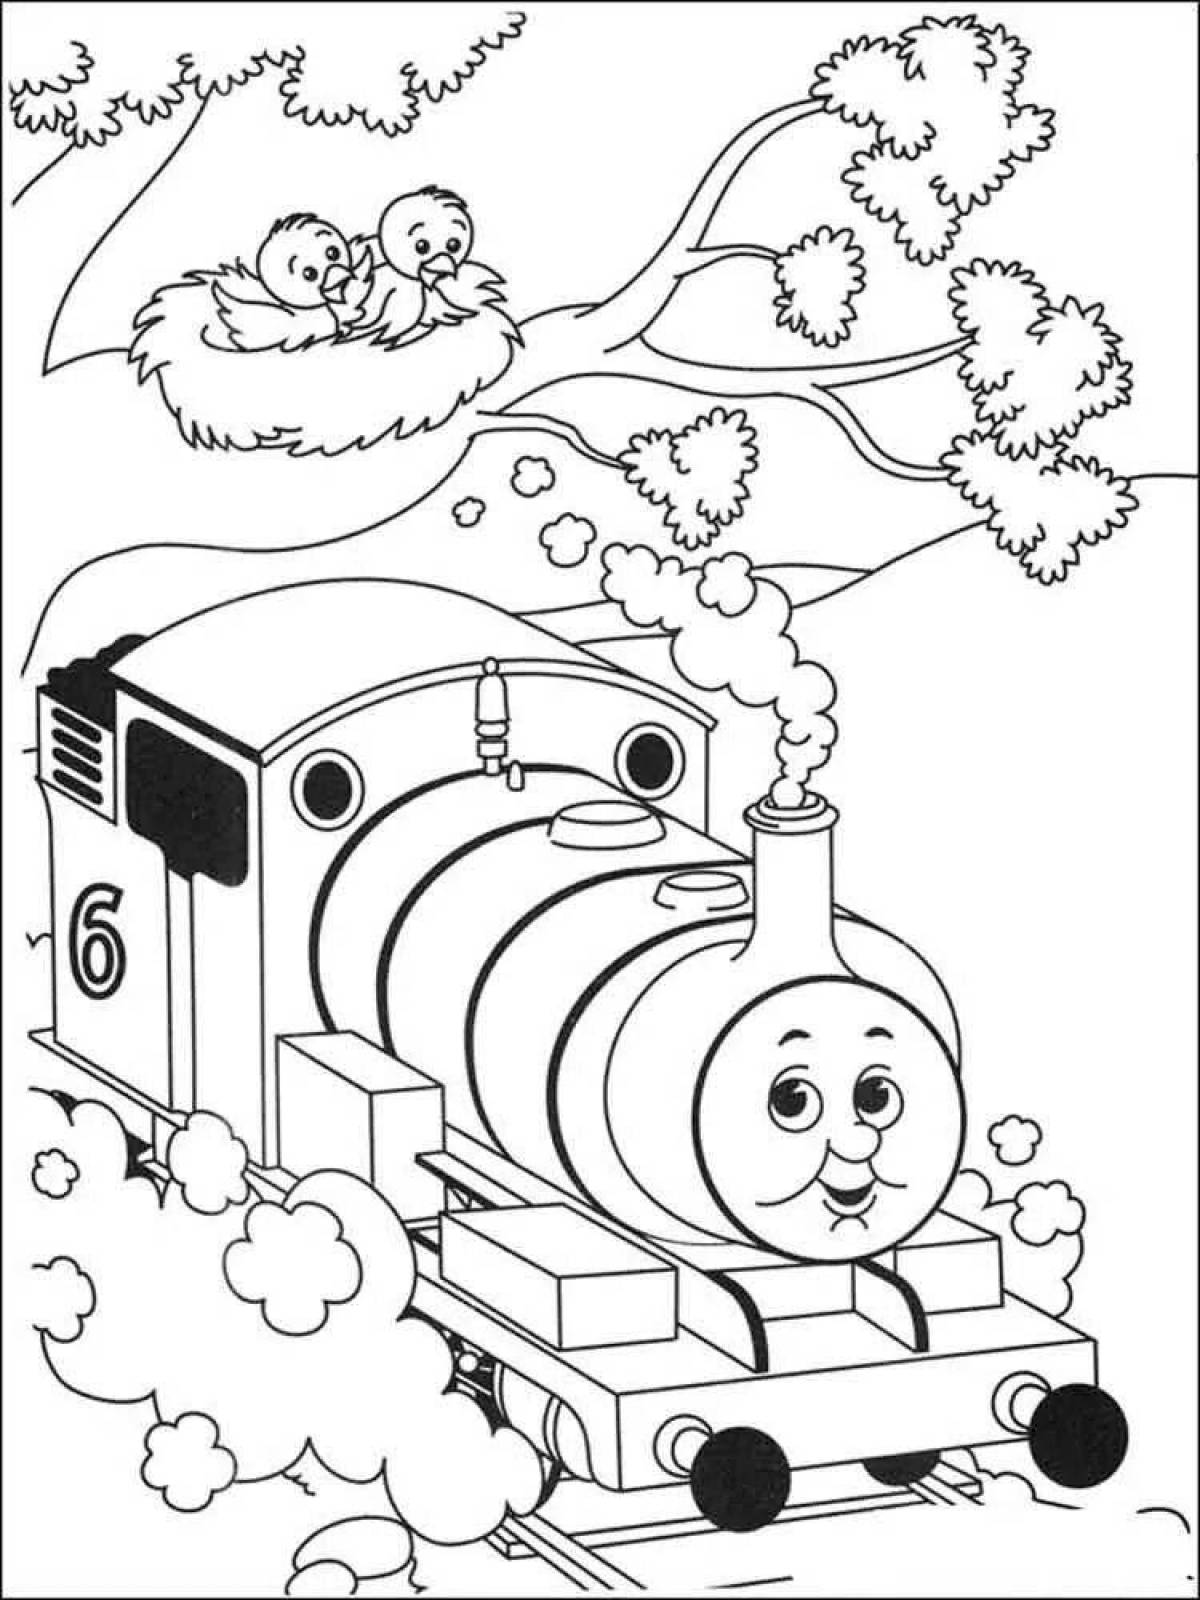 Brave thomas locomotive coloring book